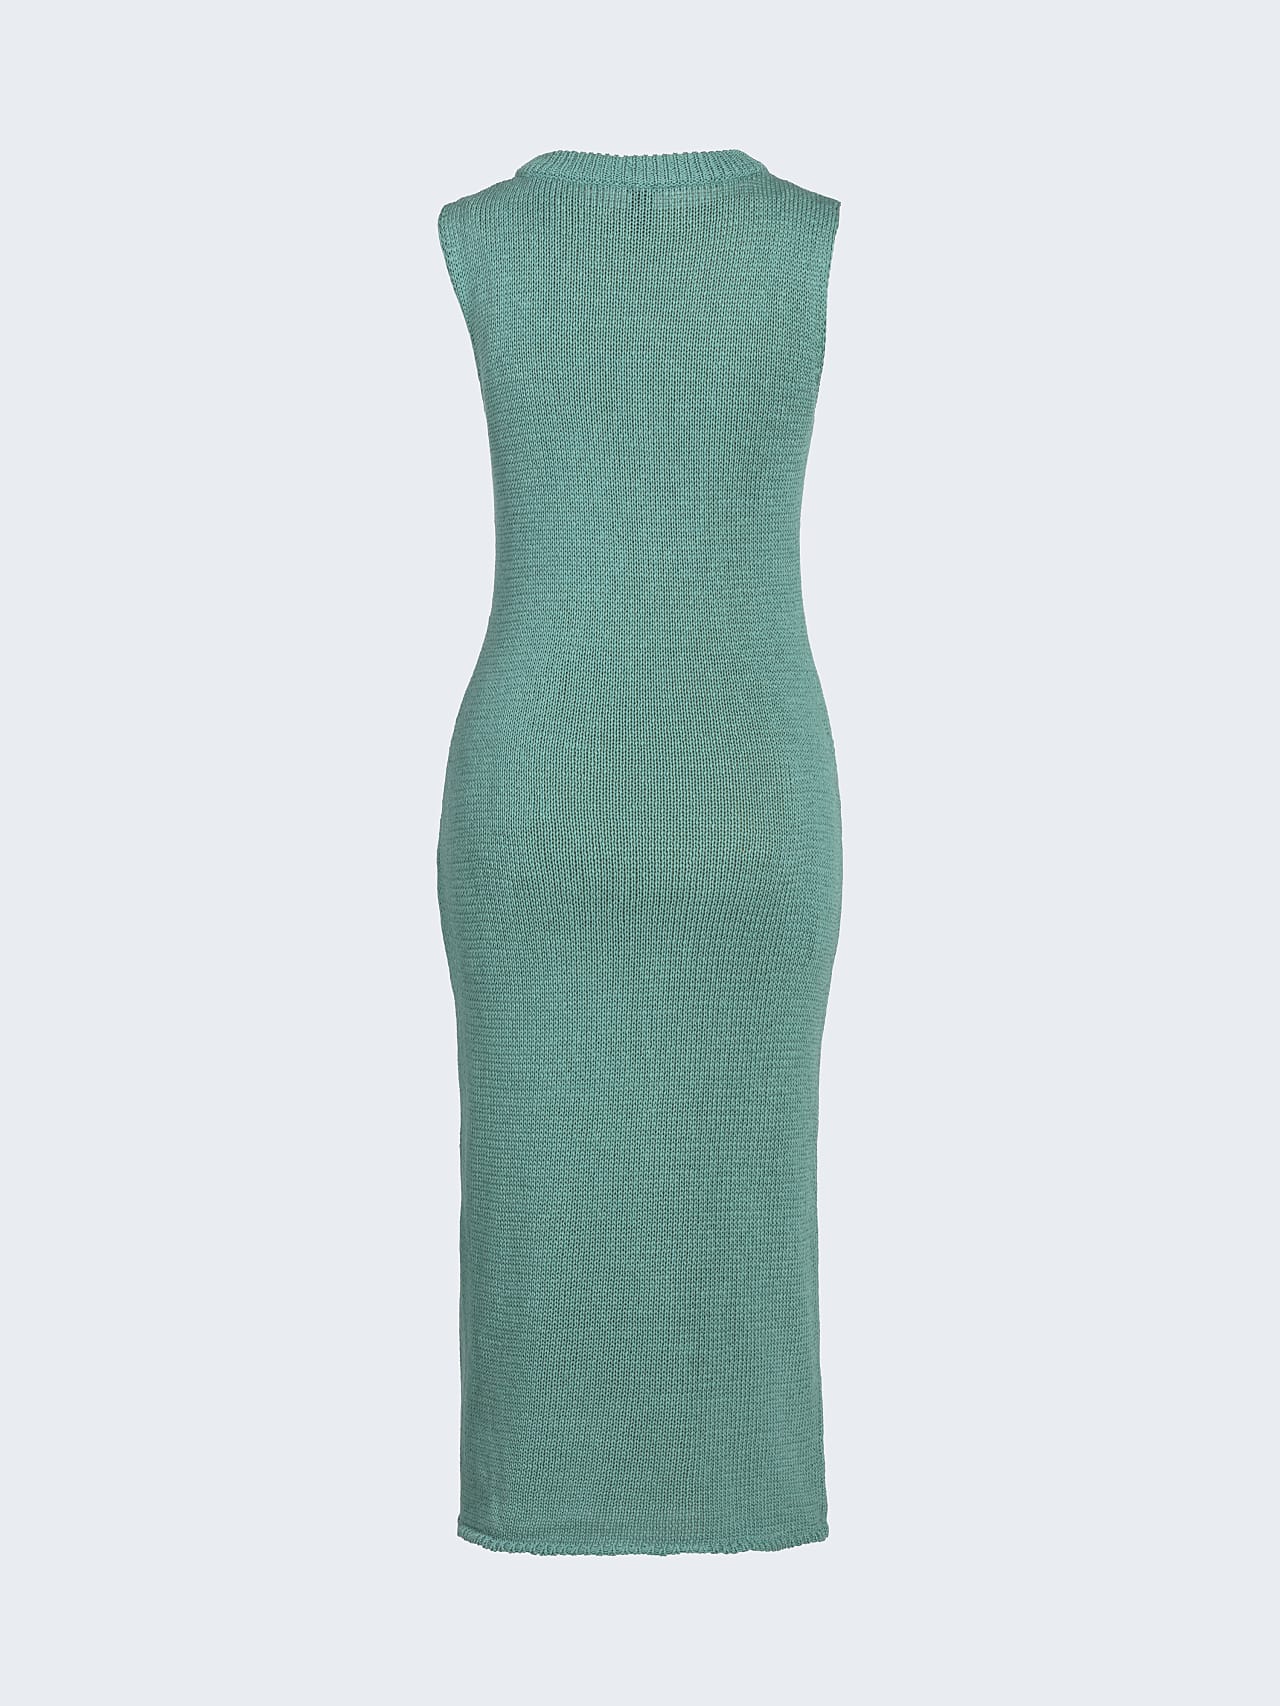 AlphaTauri | FOUDI V1.Y6.01 | Colourblock Knit Tube Dress in turquoise for Women